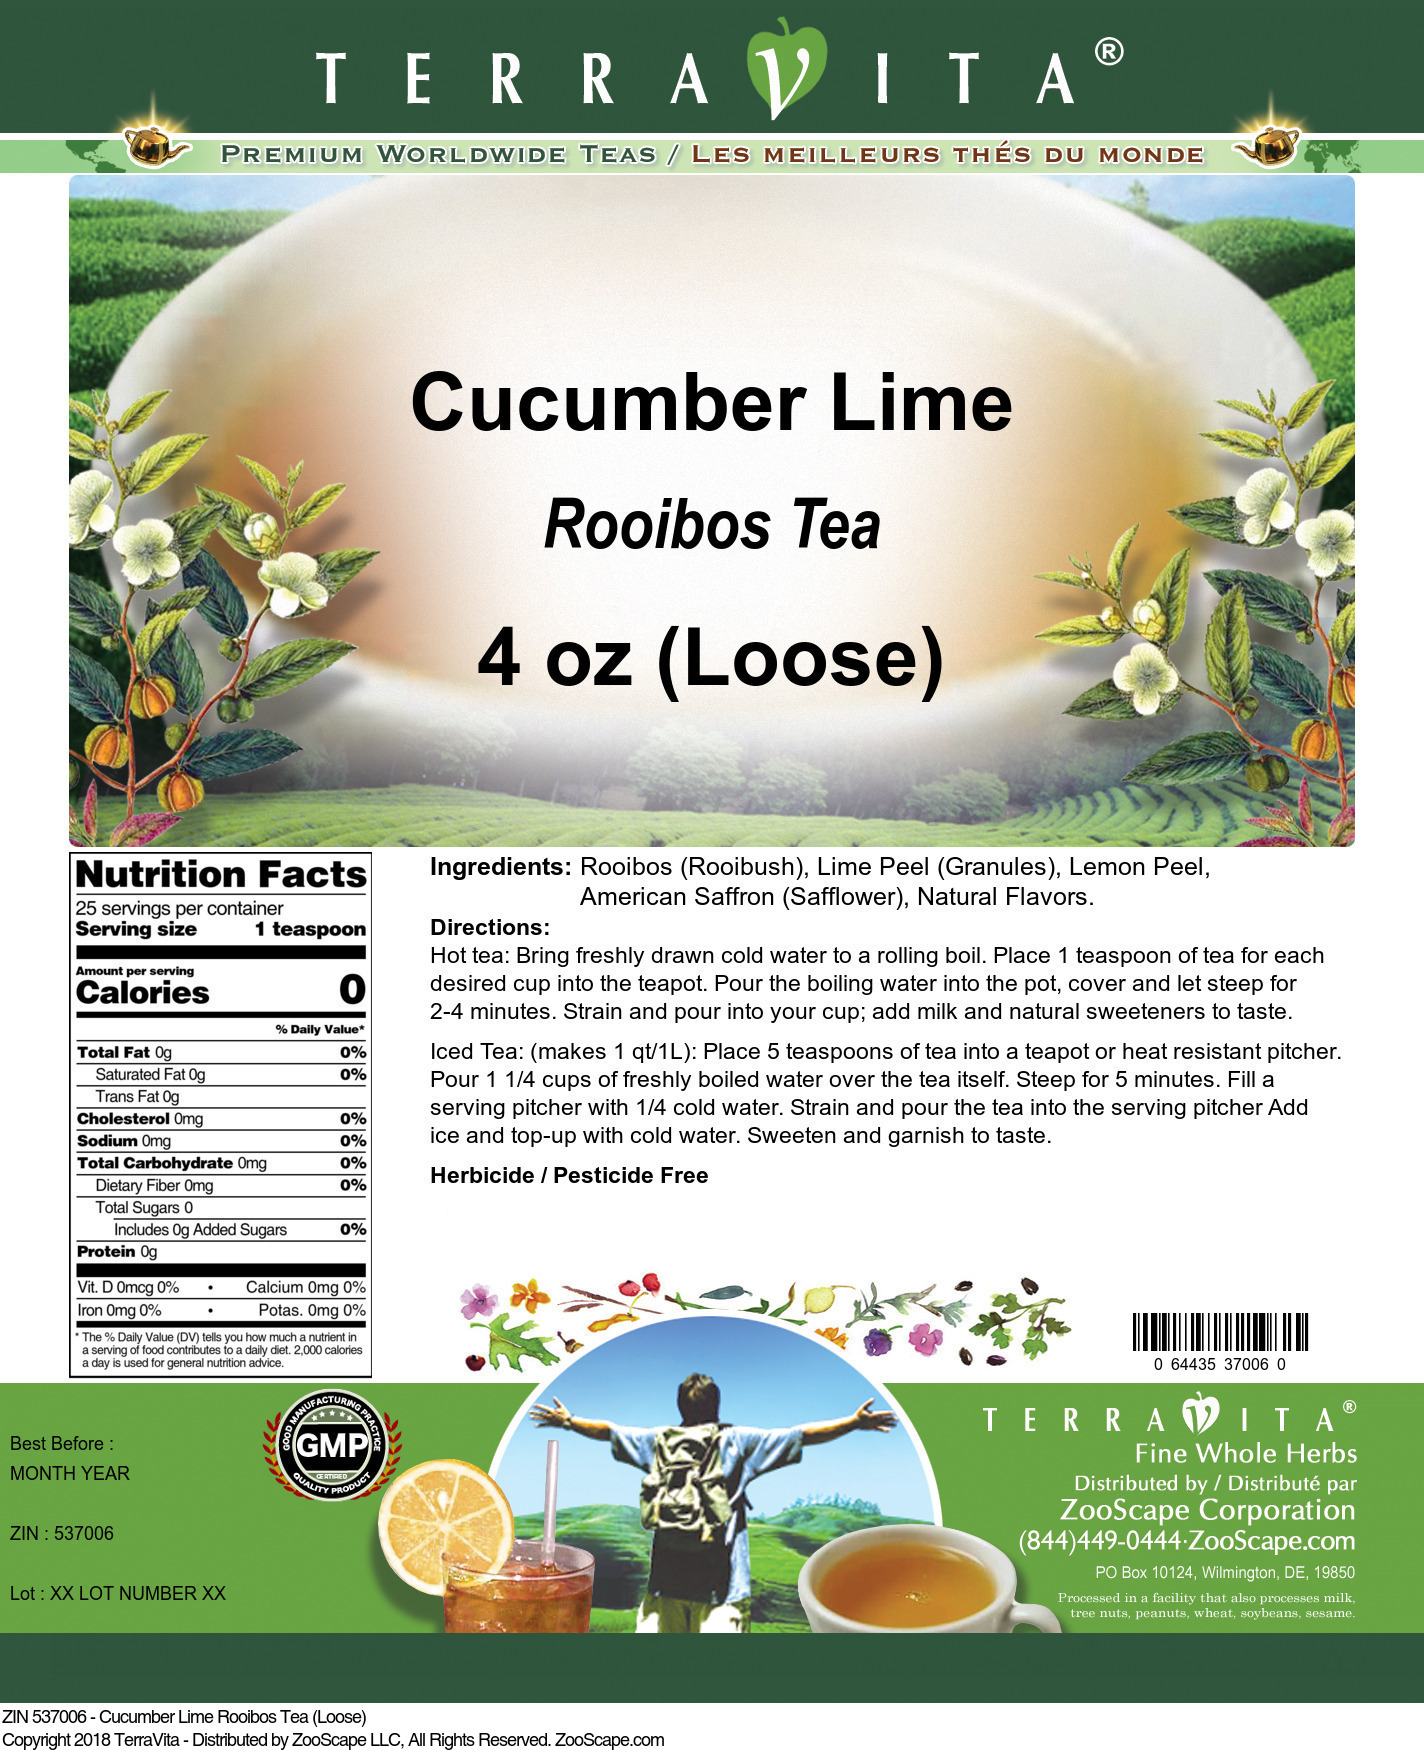 Cucumber Lime Rooibos Tea (Loose) - Label